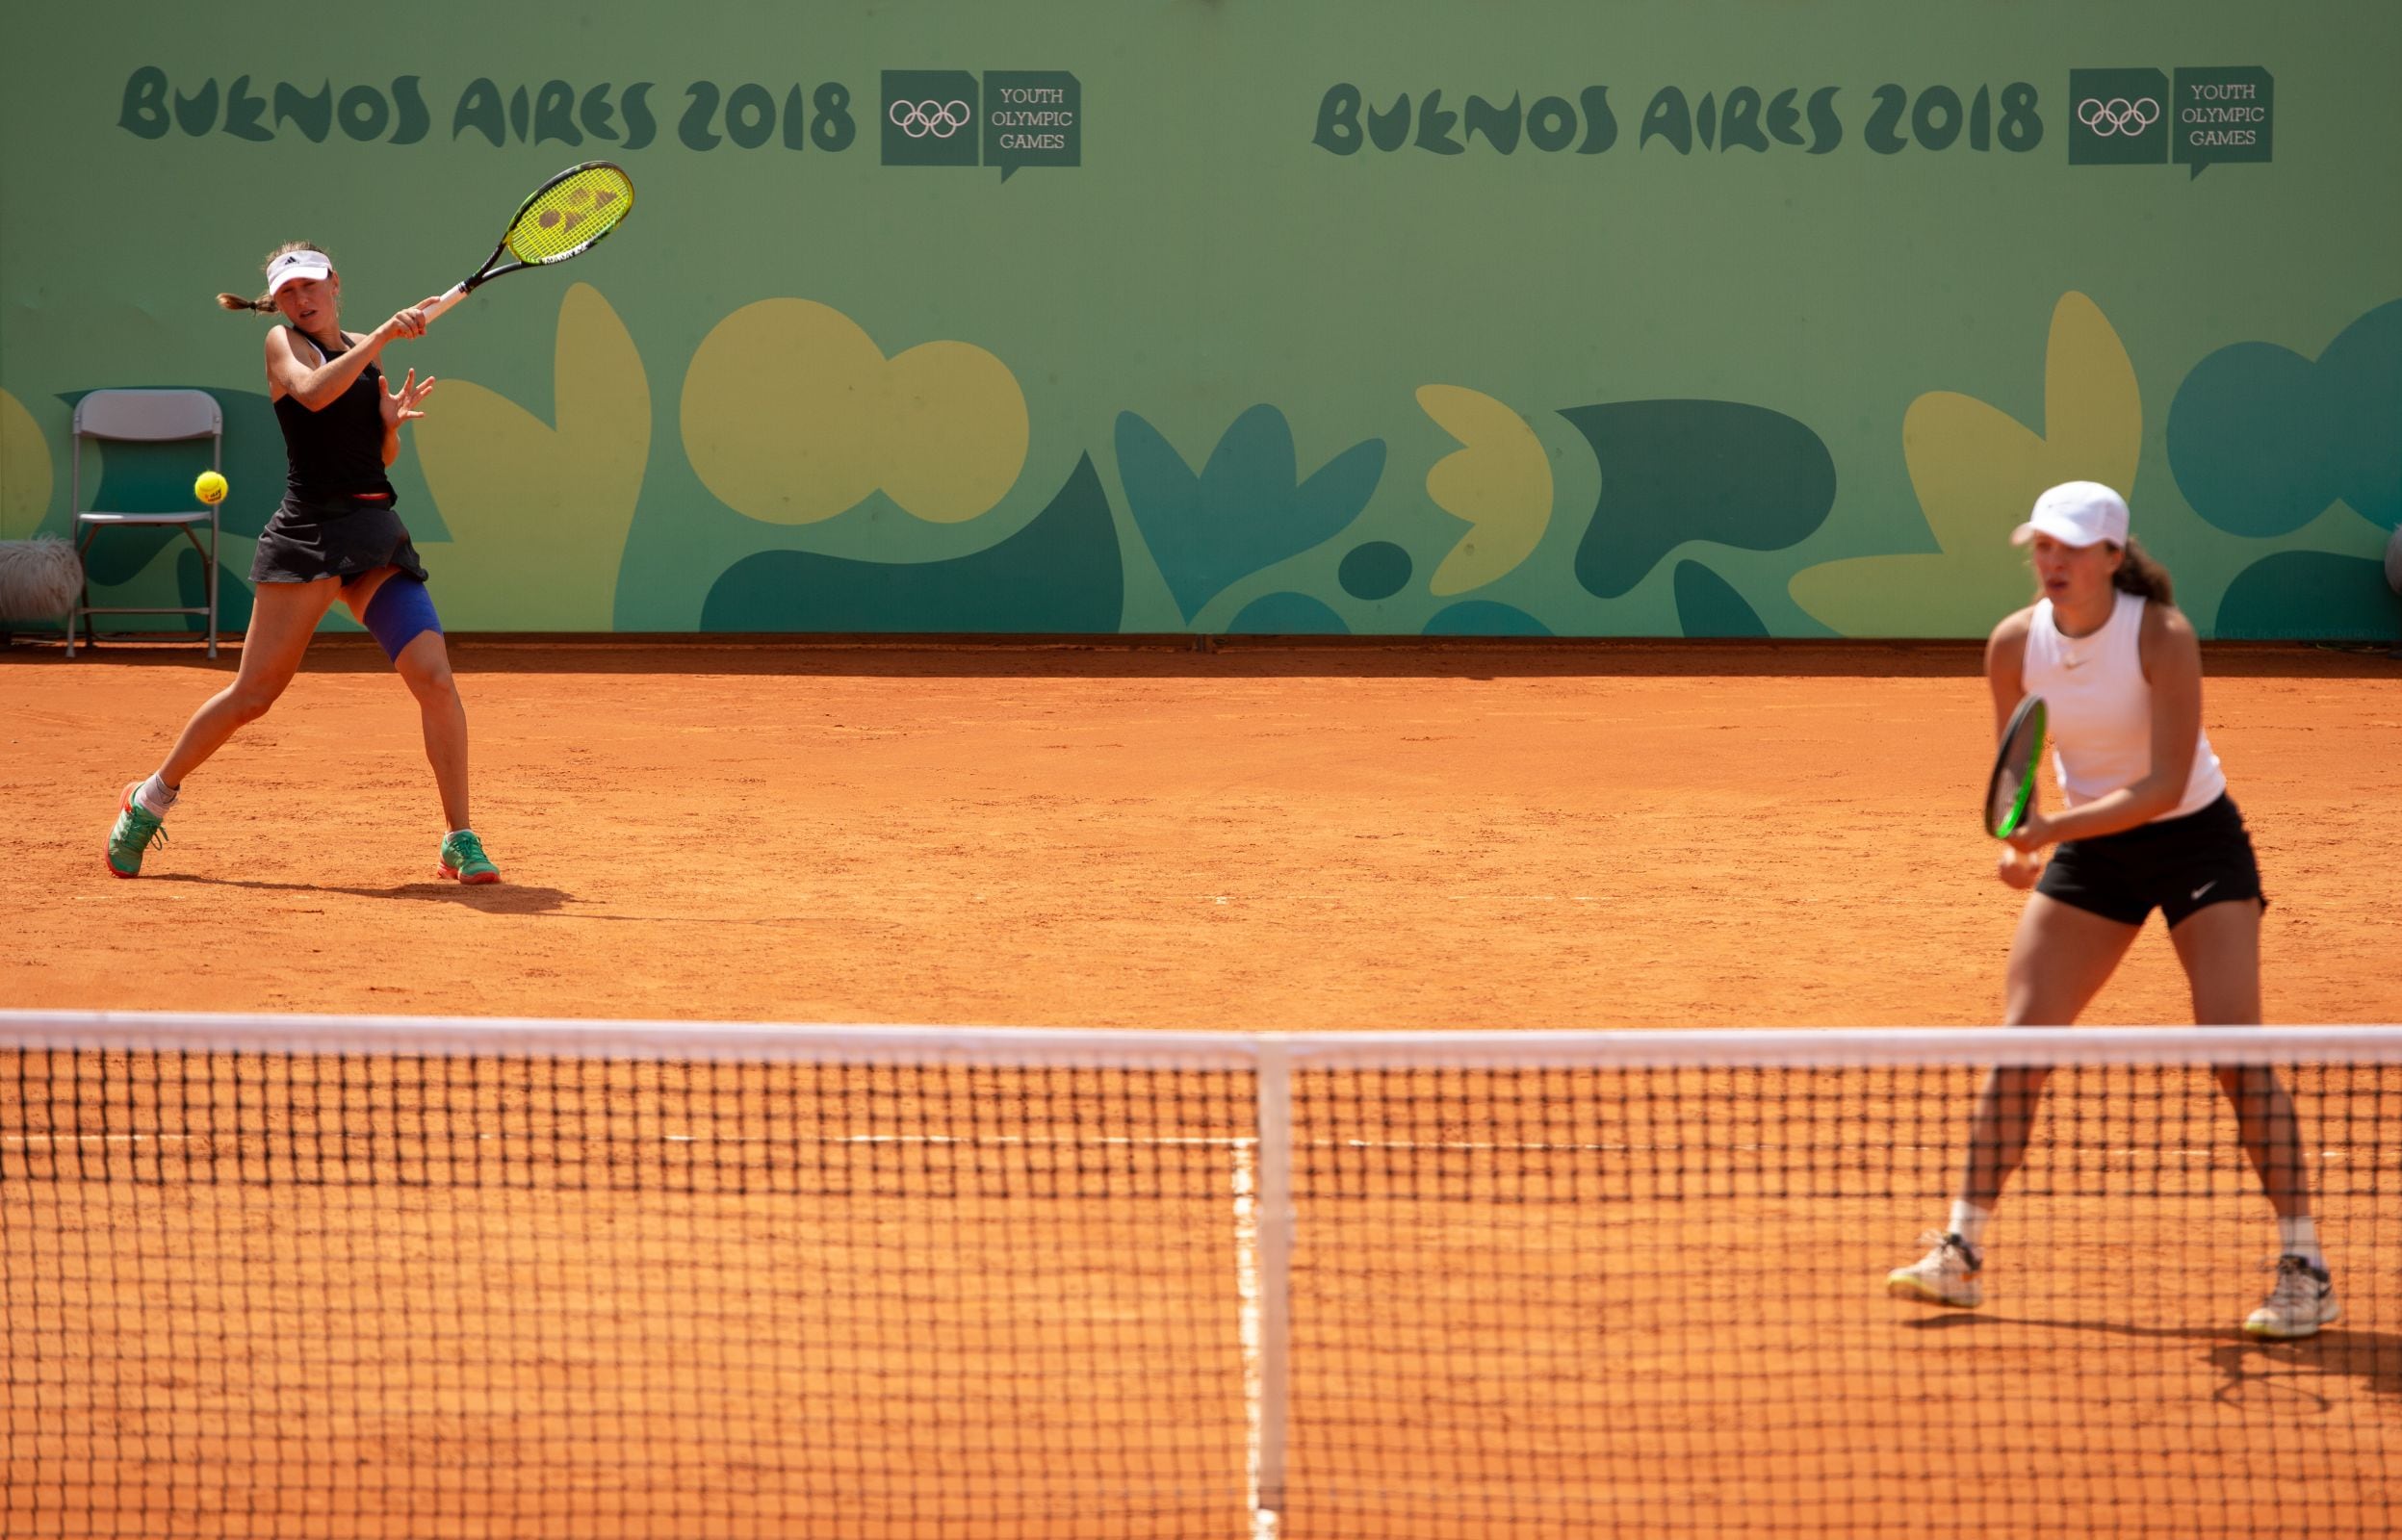 Buenos Aires 2018 - Tennis - Women’s Doubles